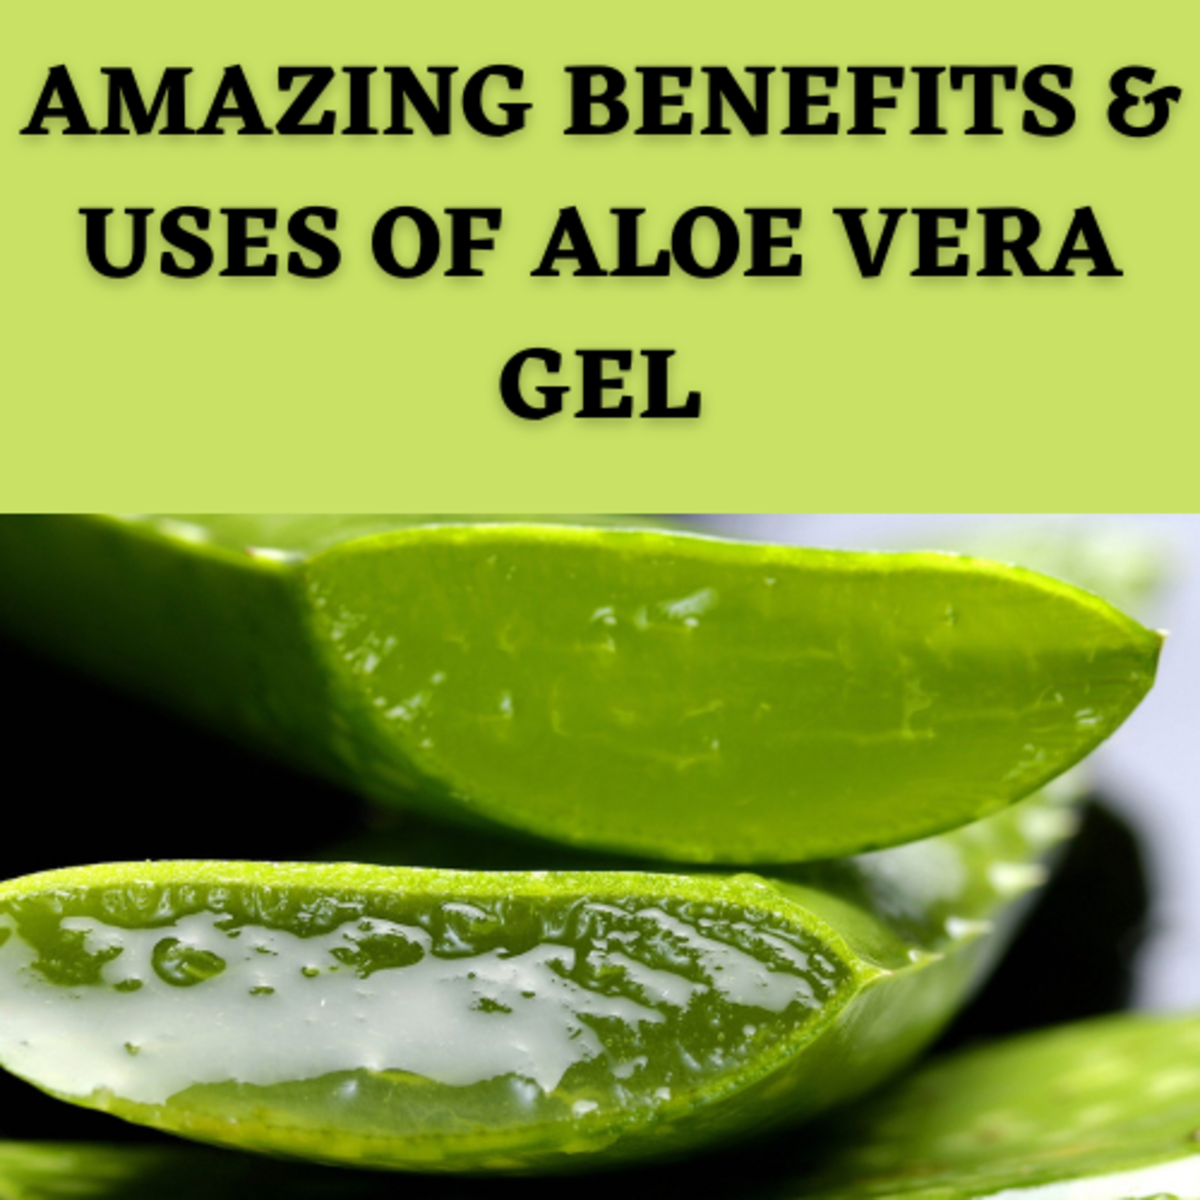 Amazing Benefits and Uses of Aloe Vera Gel